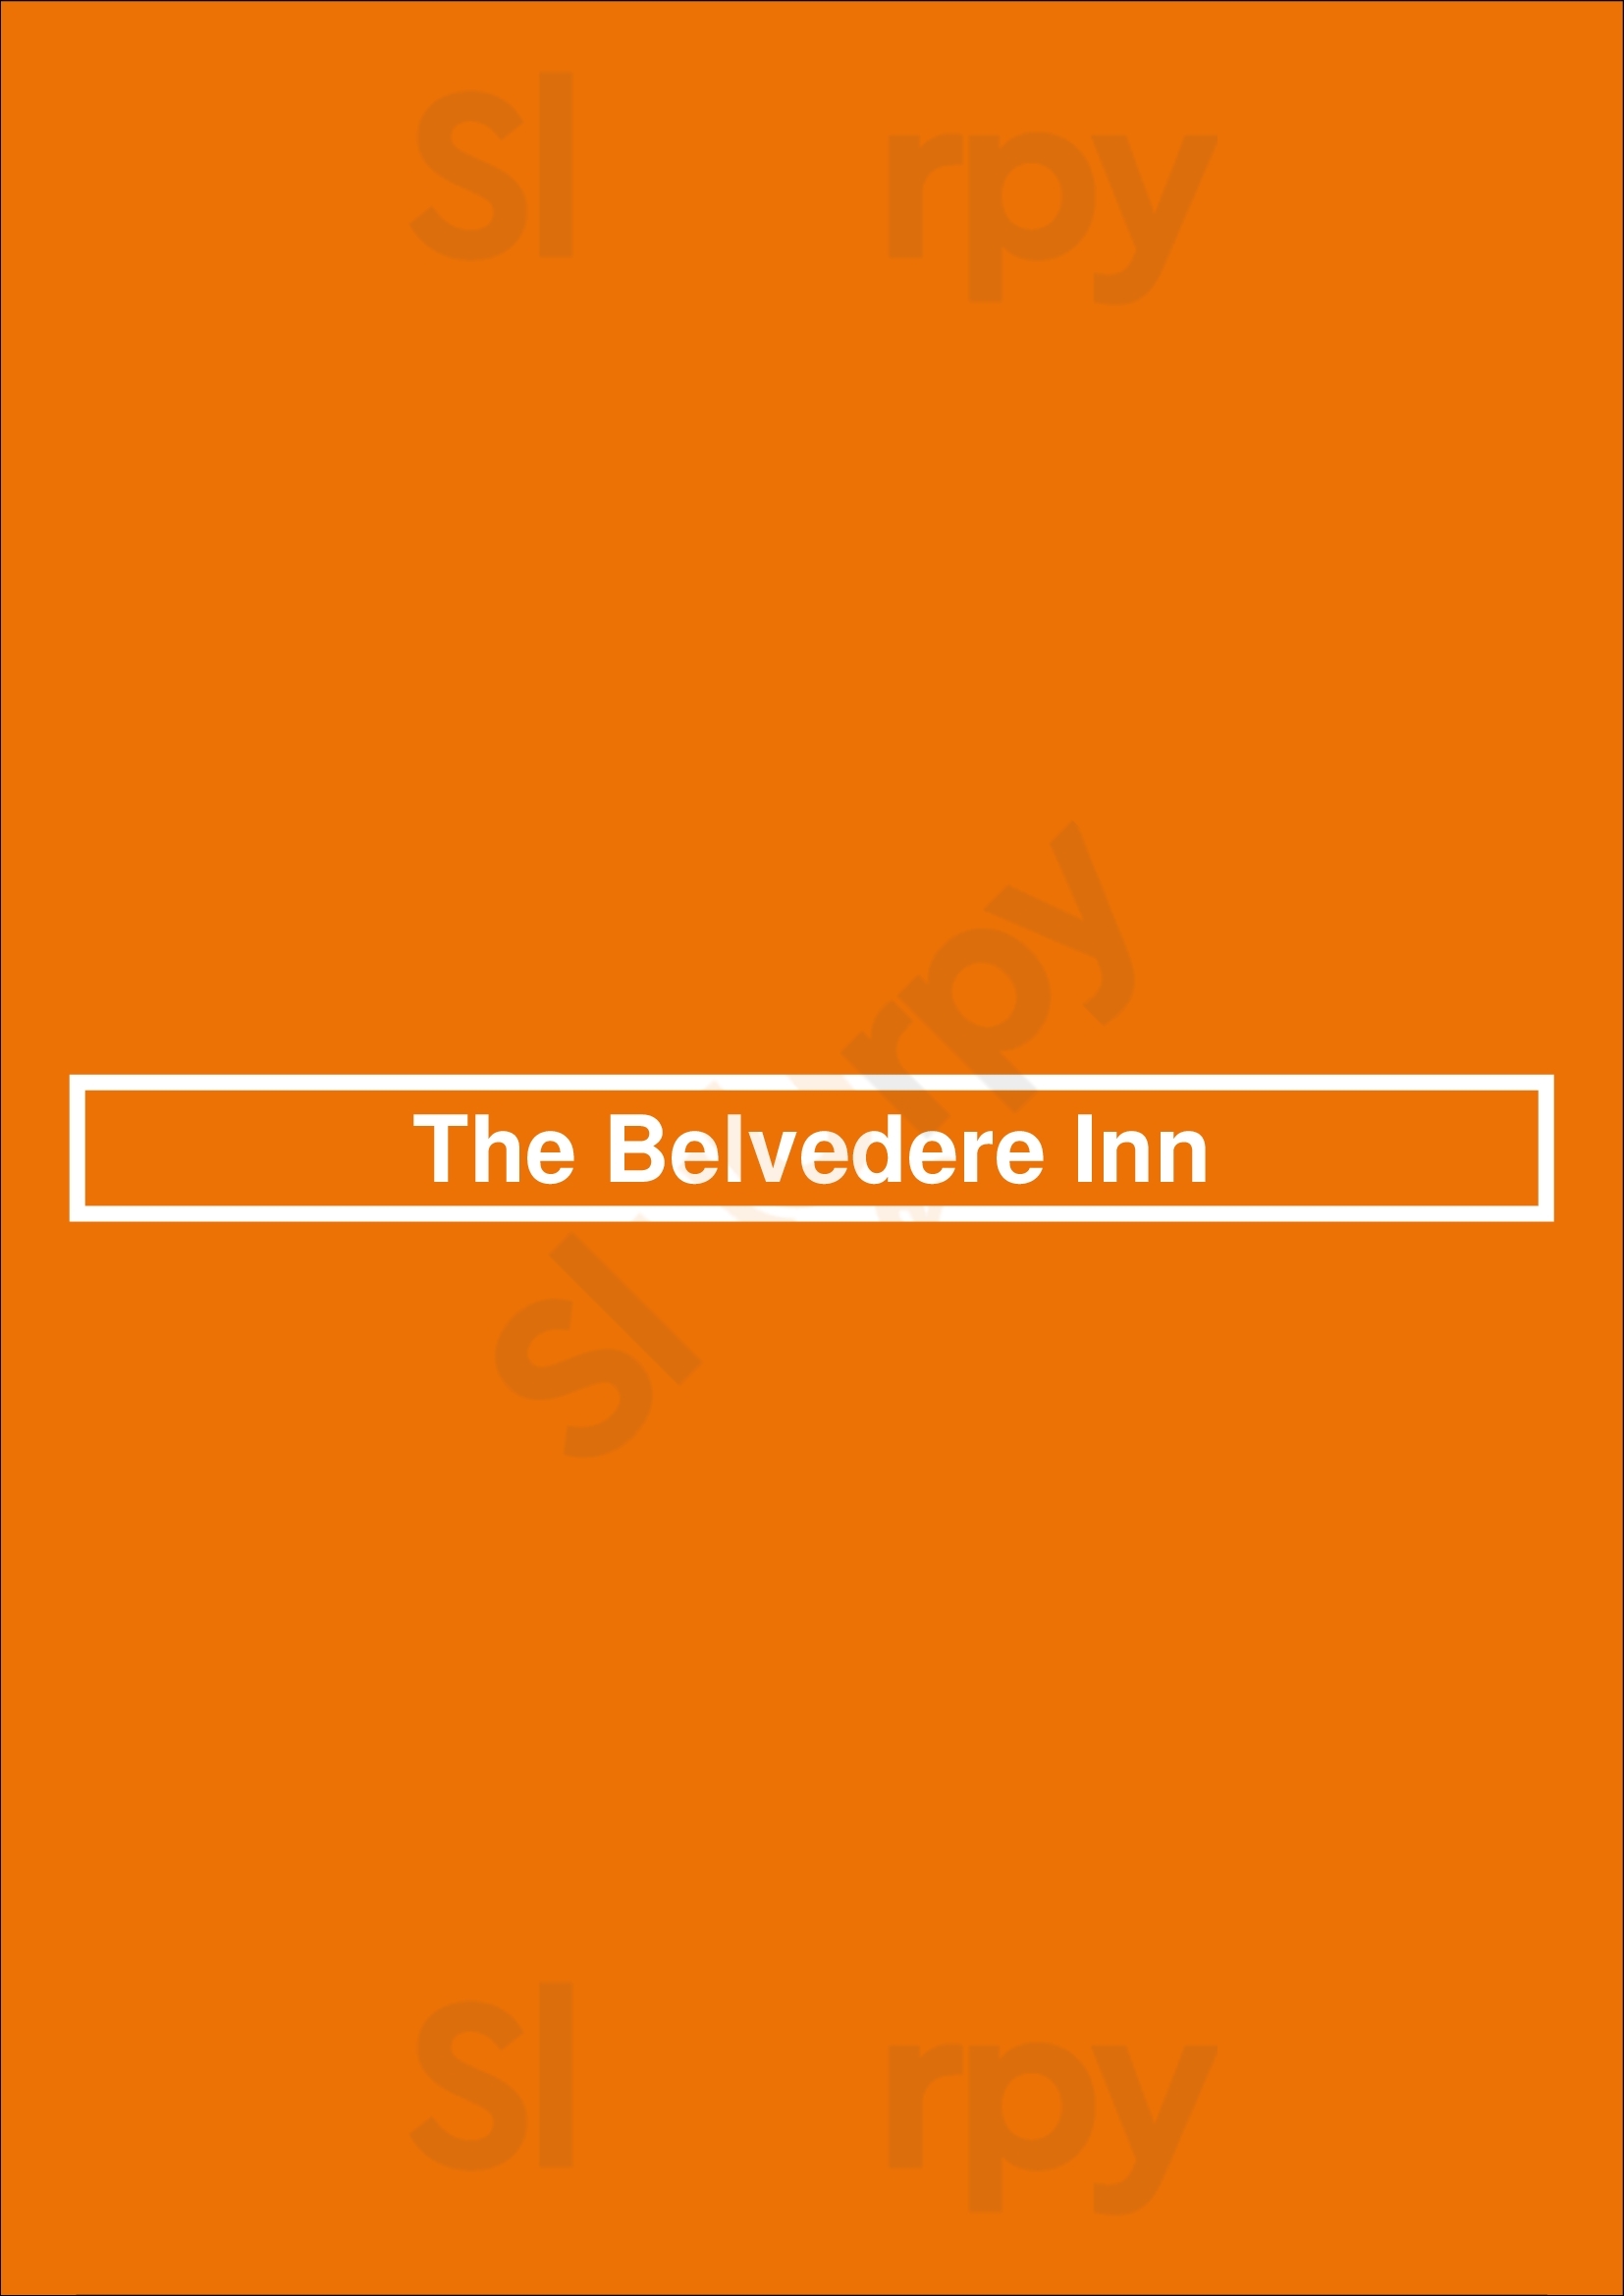 The Belvedere Inn Lancaster Menu - 1